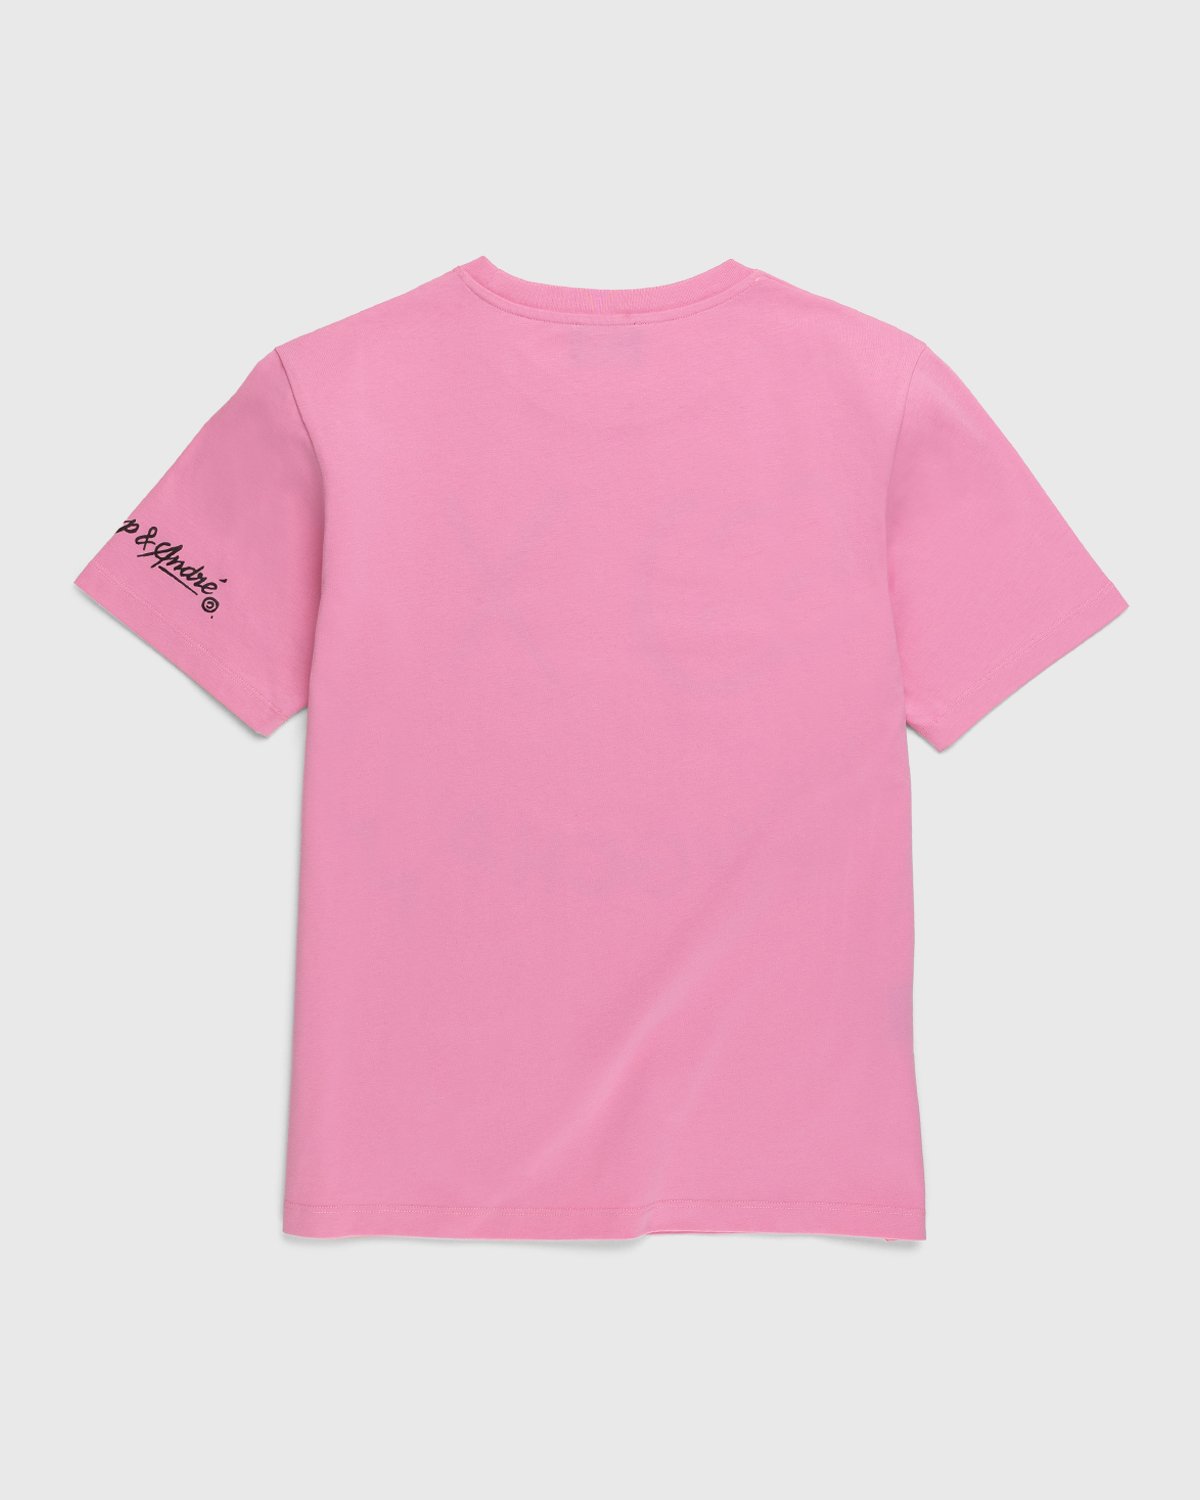 Longchamp x André Saraiva - T-Shirt Pink - Clothing - Pink - Image 3